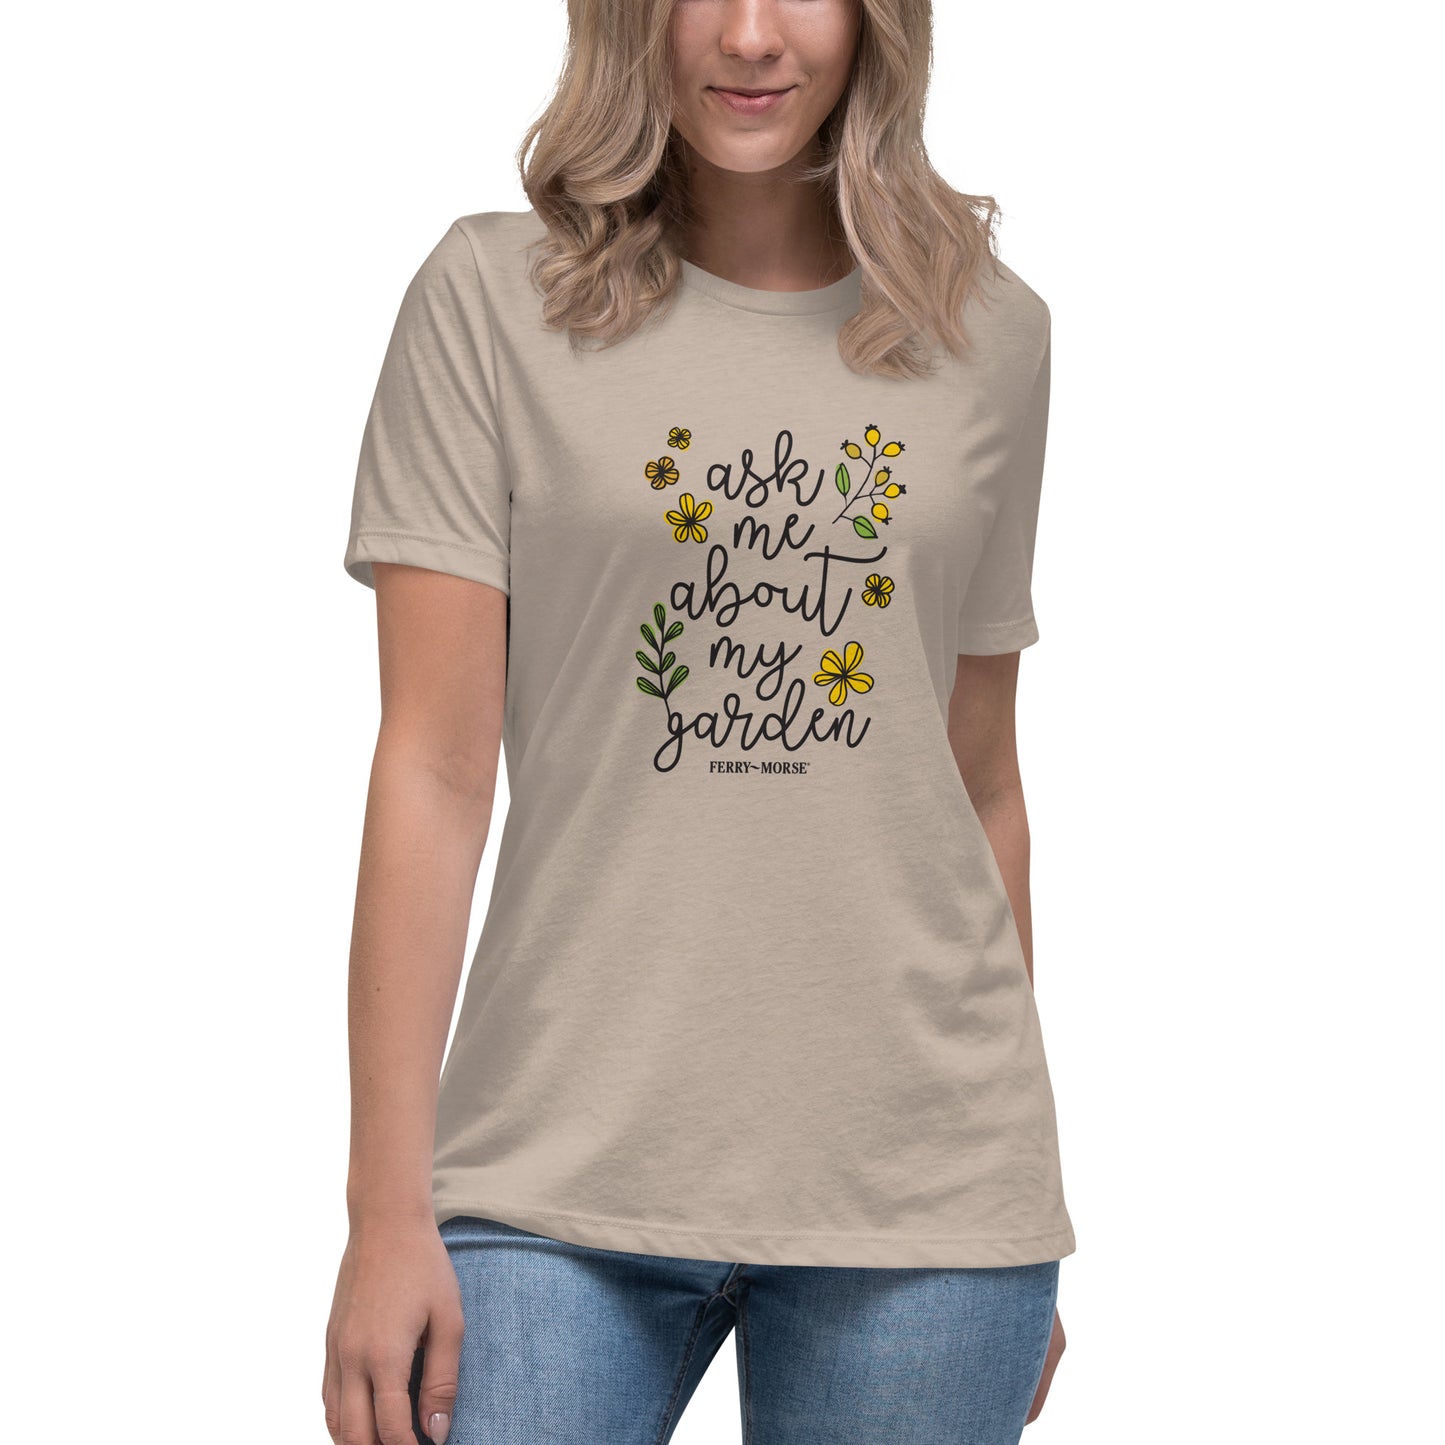 "Ask Me About My Garden" Women's Cotton T-Shirt